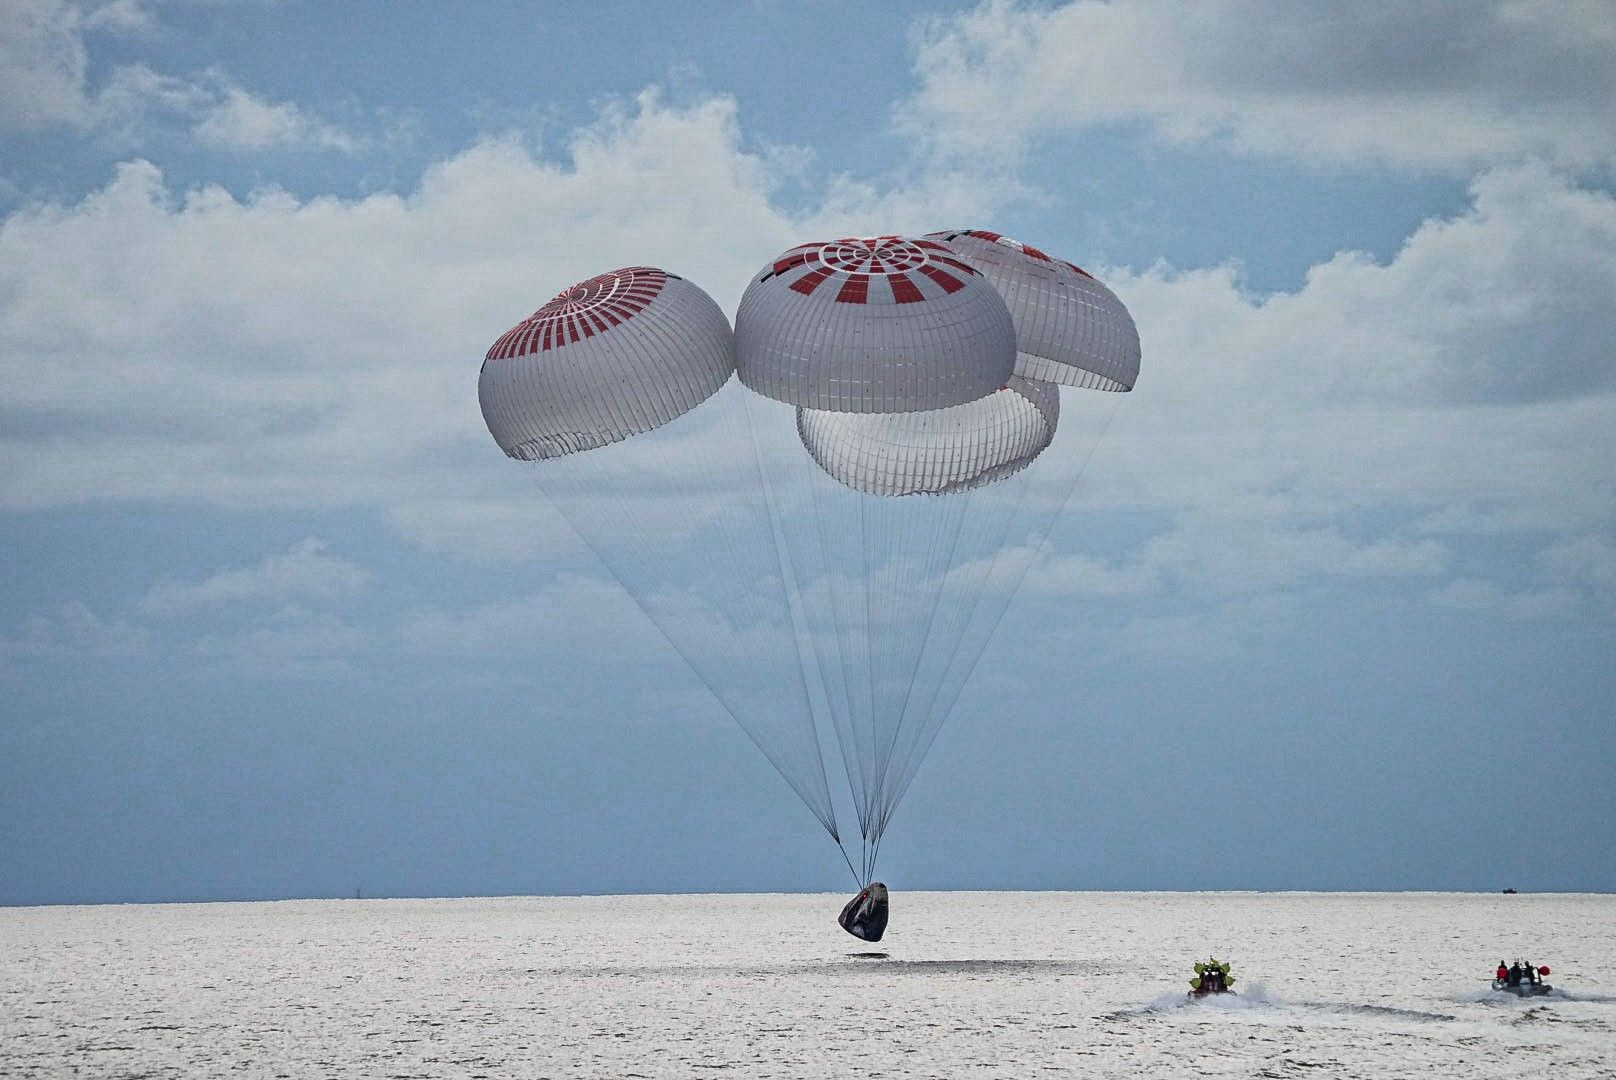 Space X splashdown: The Inspiration4 crew returns to Earth, lands in ocean near Florida